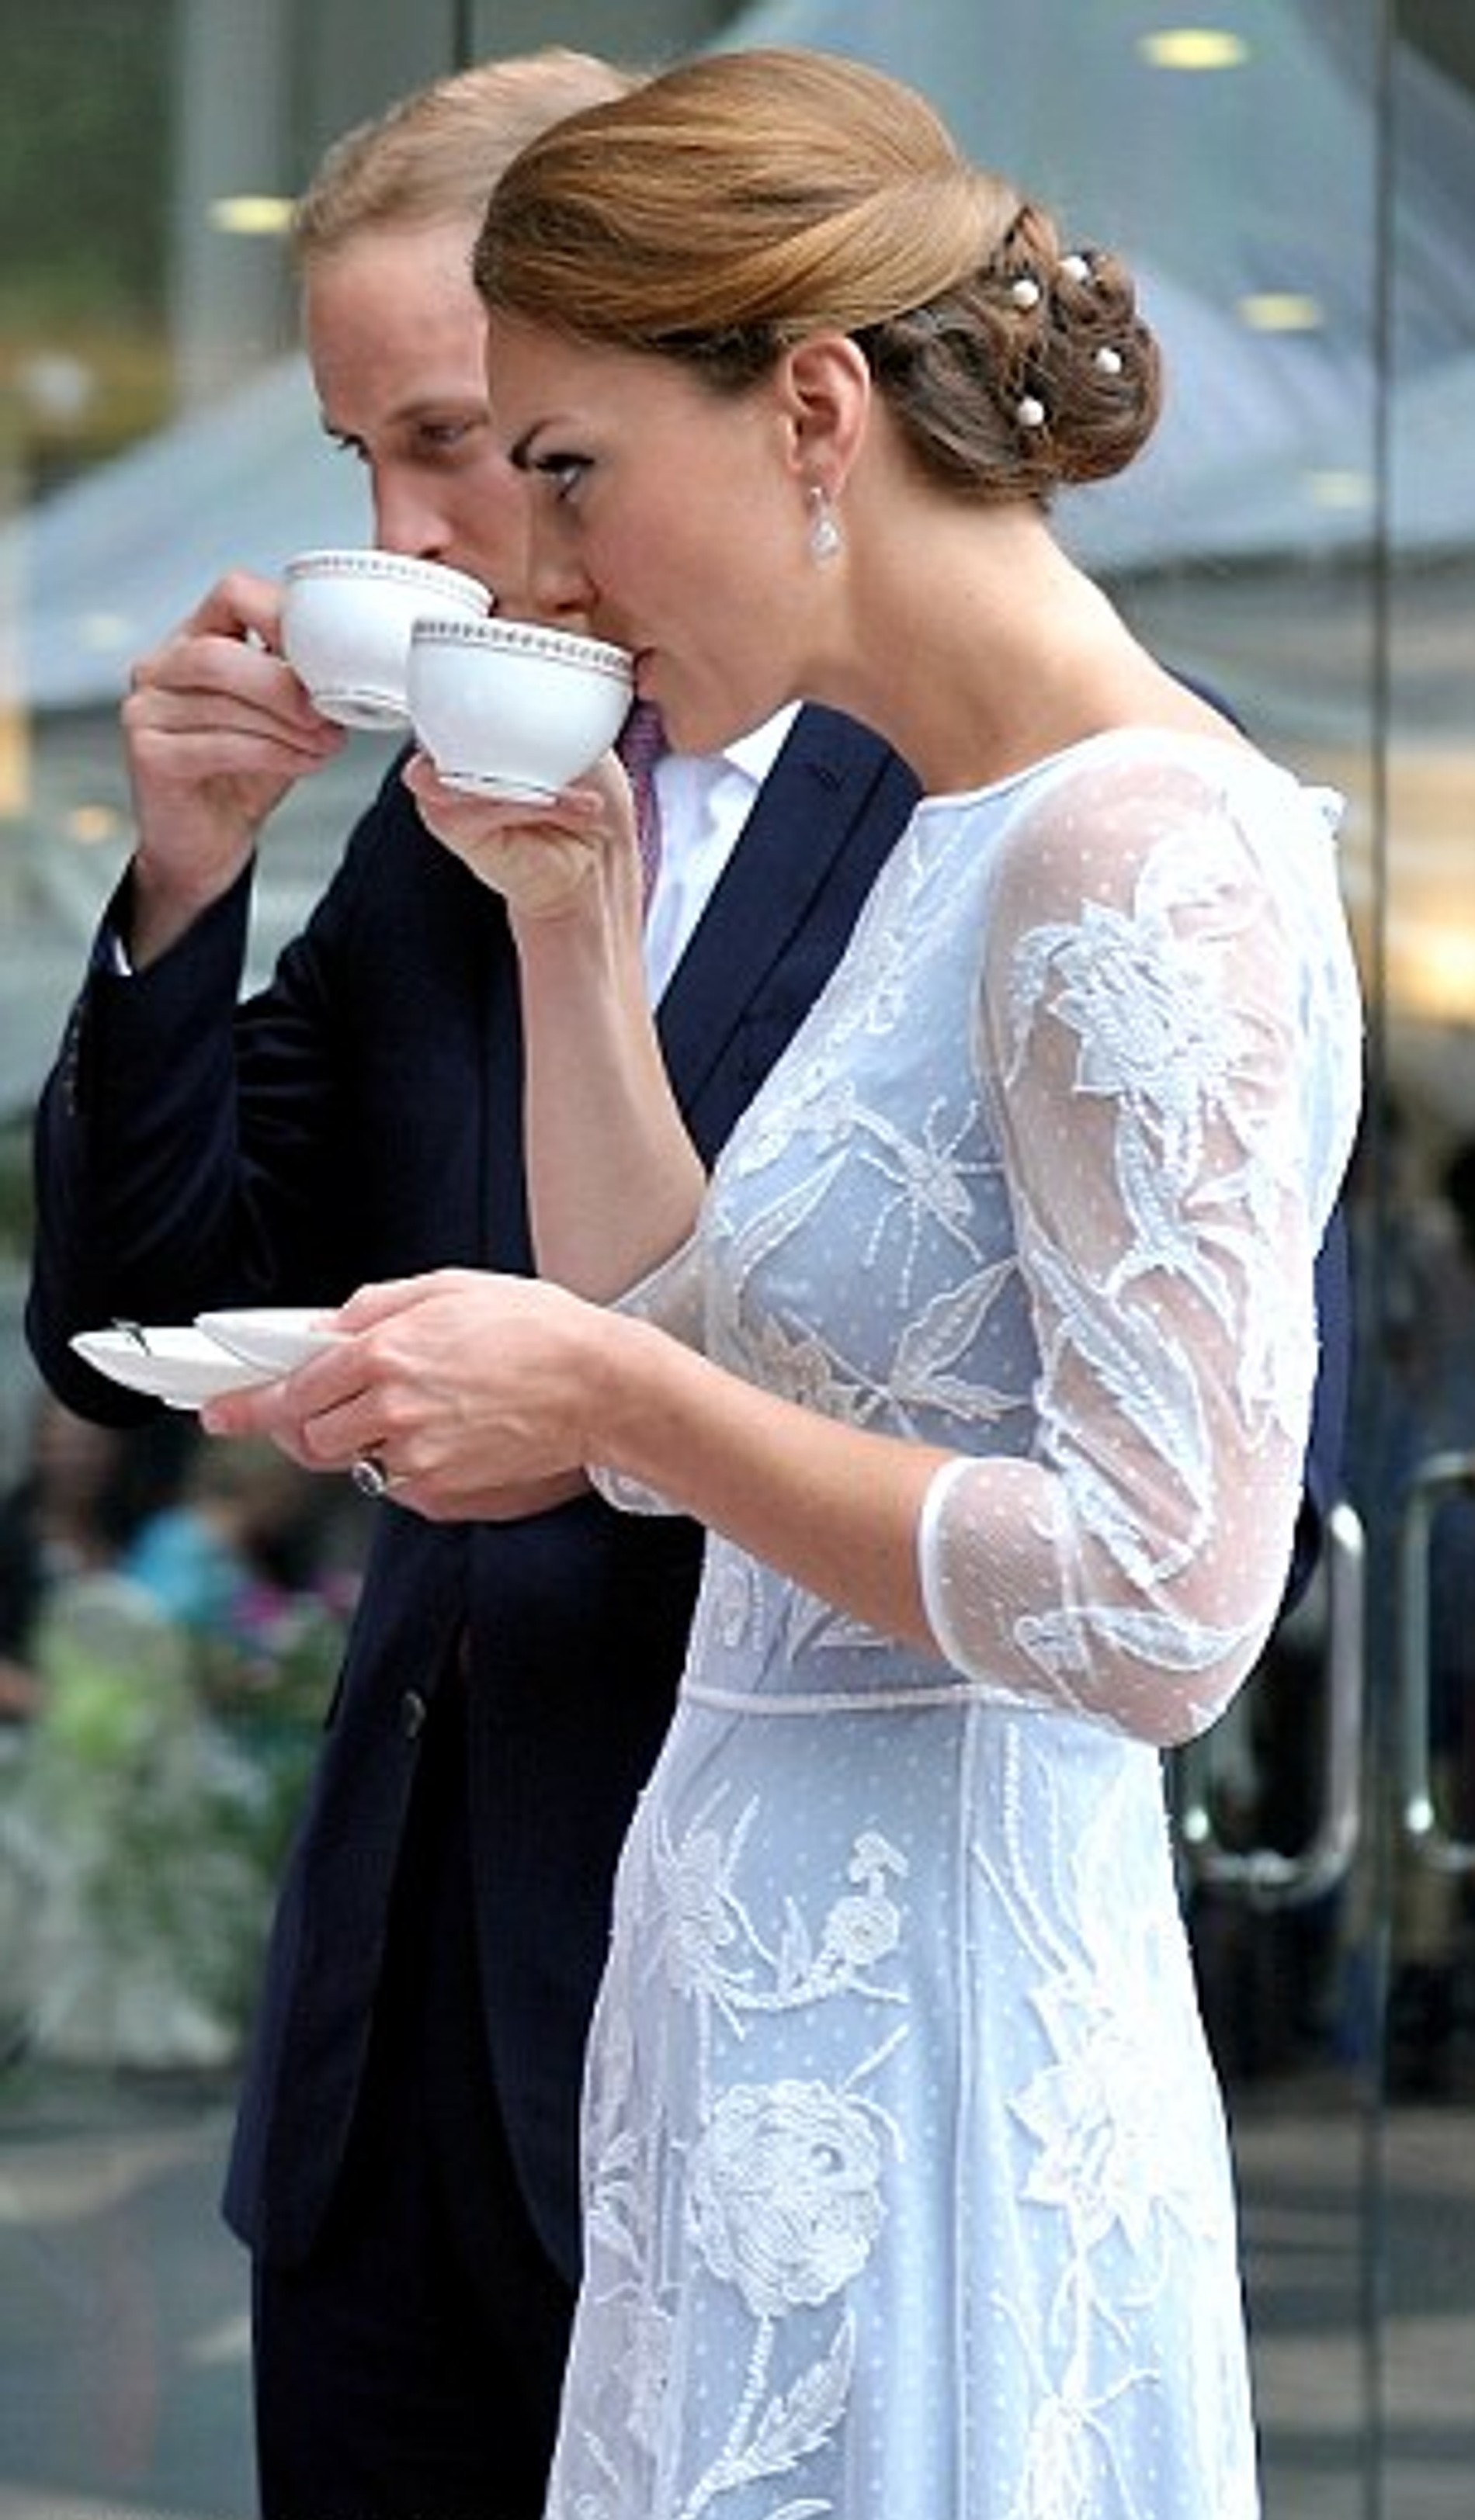 Кейт Миддлтон и принц Уильям пьют чай
Фото: Daily Mail